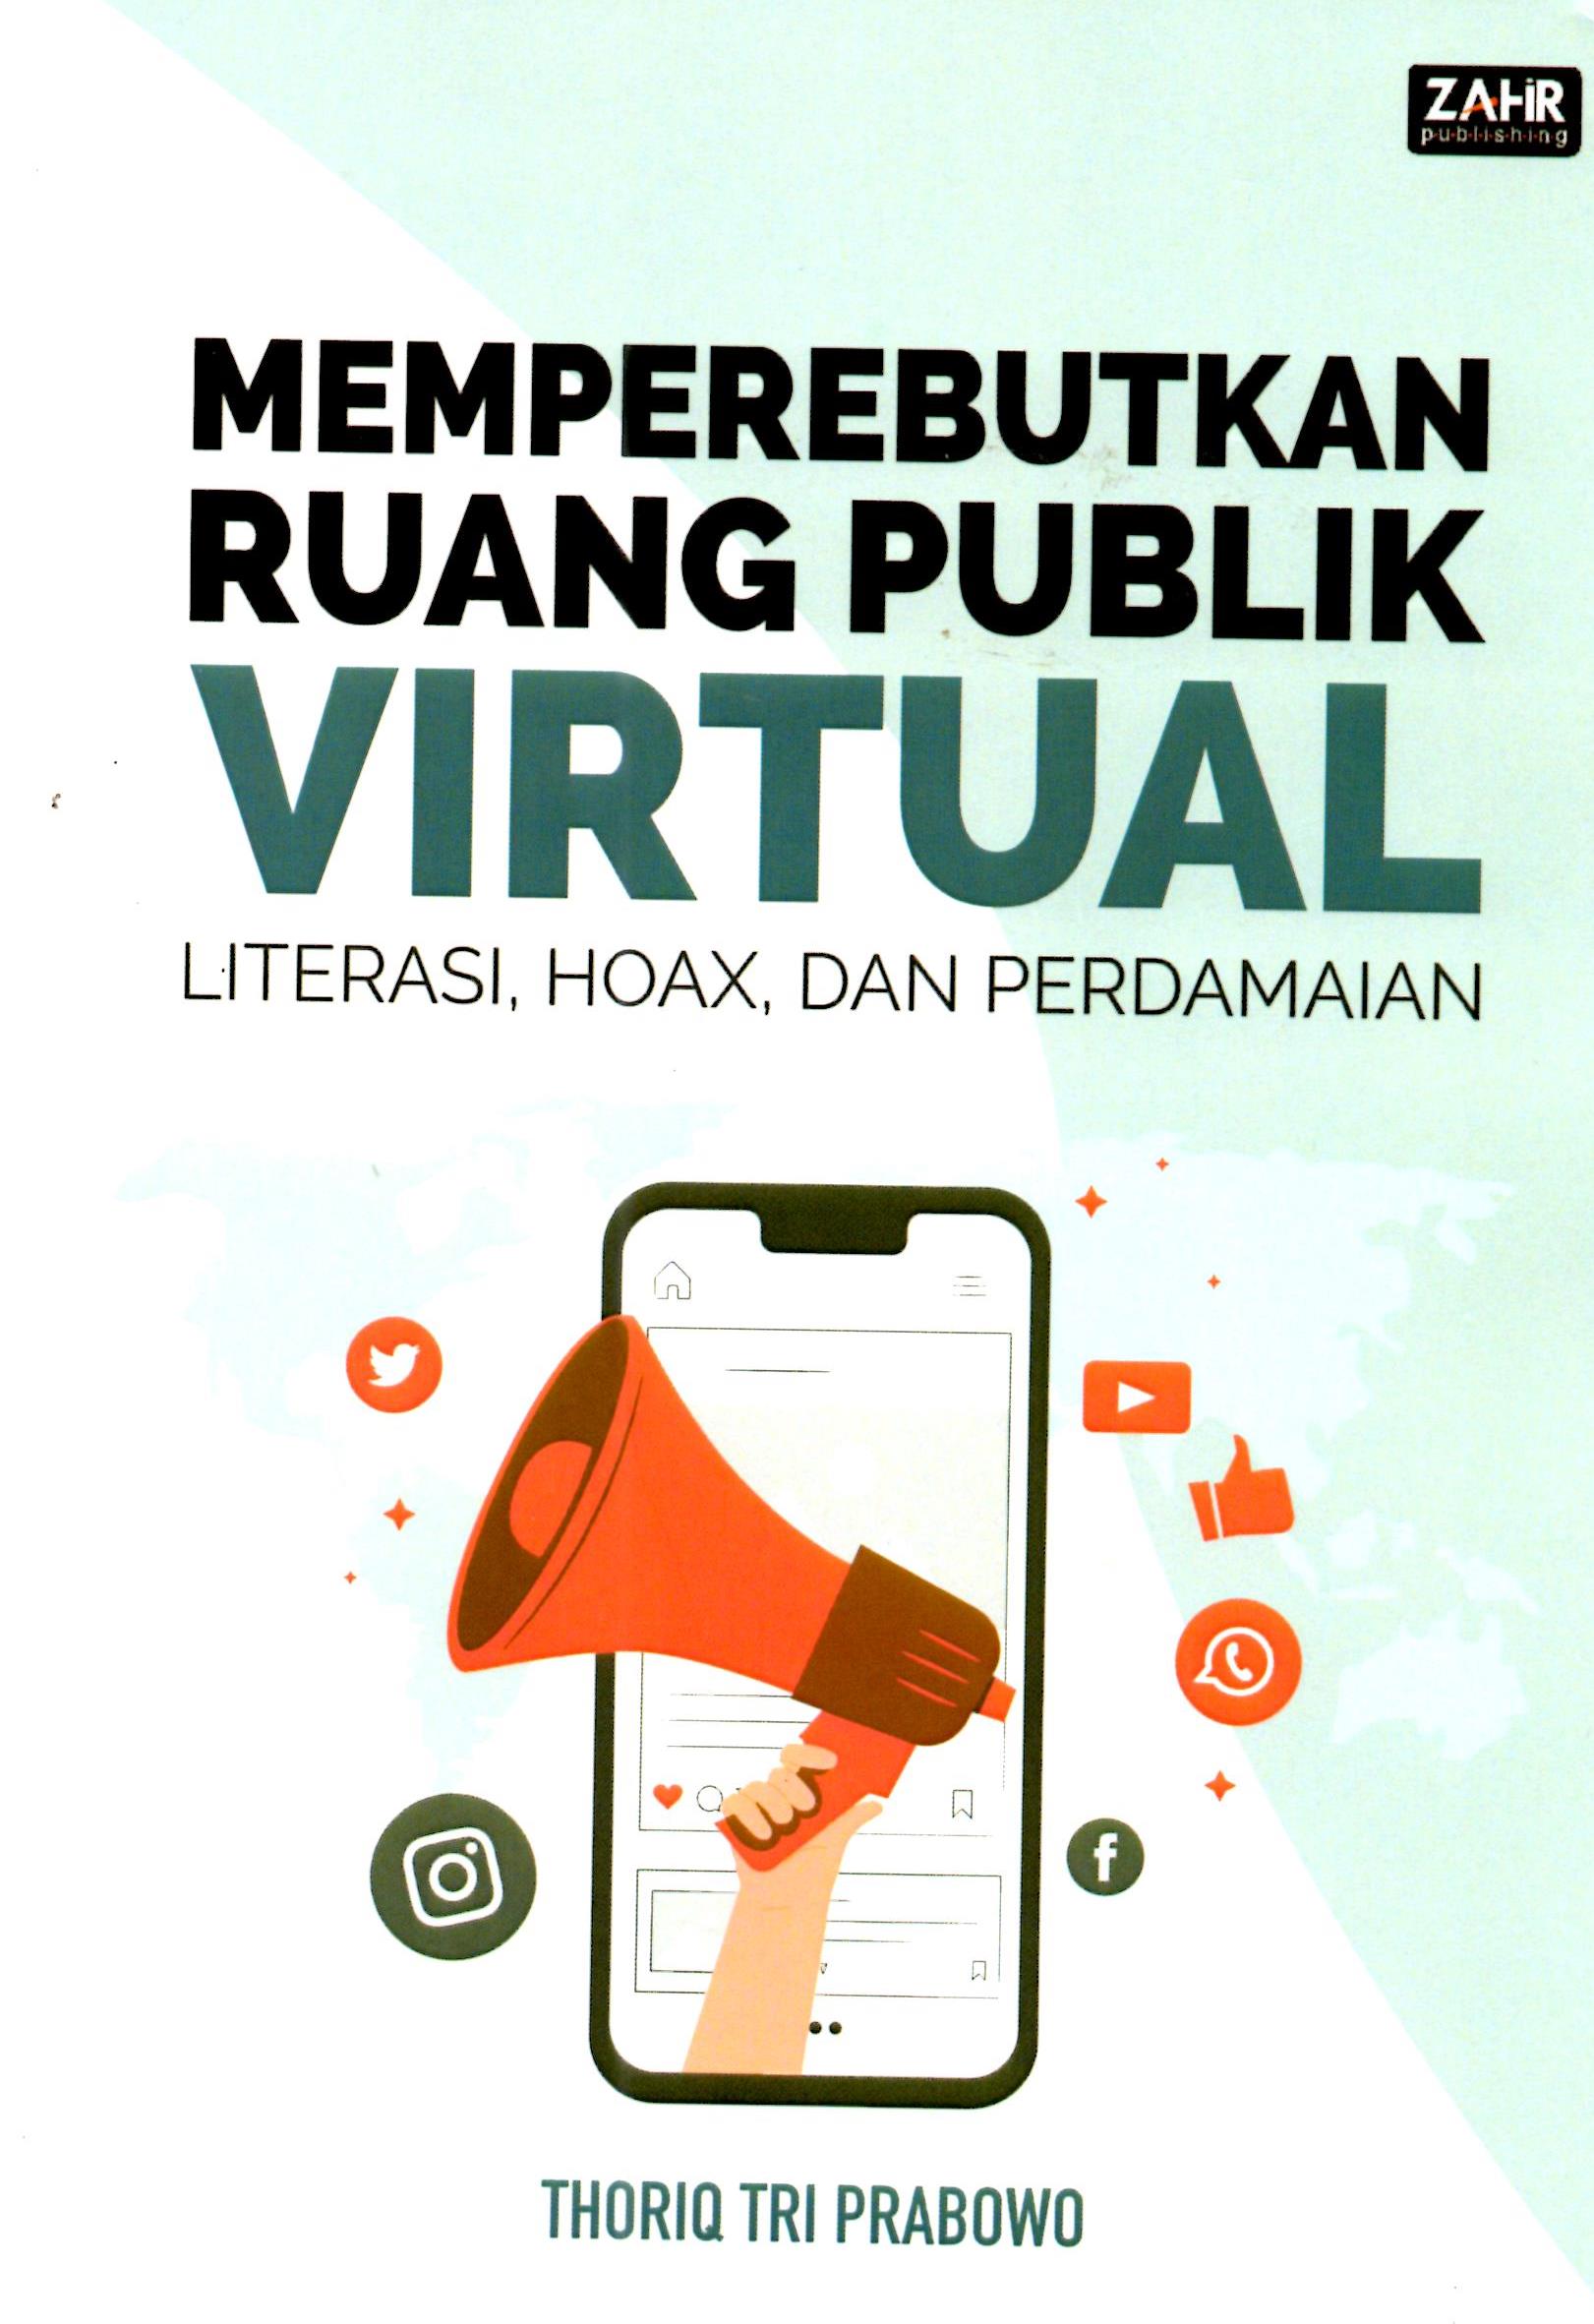 “Memperebutkan Ruang Publik Virtual, Literasi, Hoax dan Perdamaian”  / oleh Thoriq Tri Prabowo., 